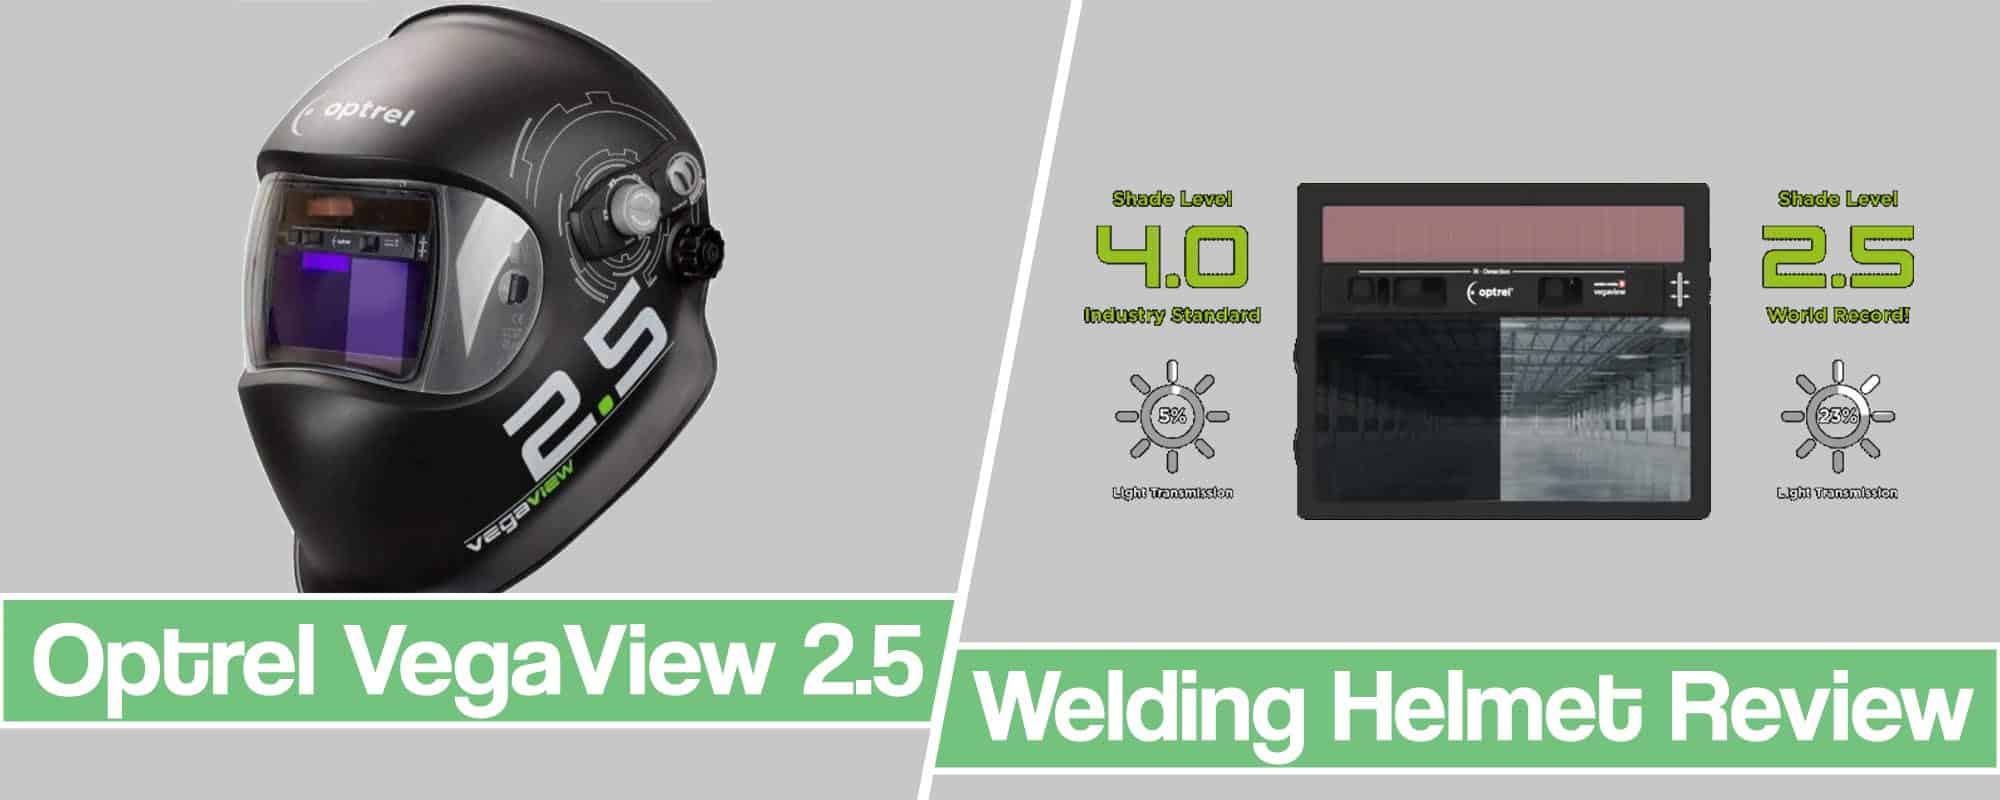 Optrel VegaView 2.5 Welding Helmet Review 2022 Pros & Cons of its Features